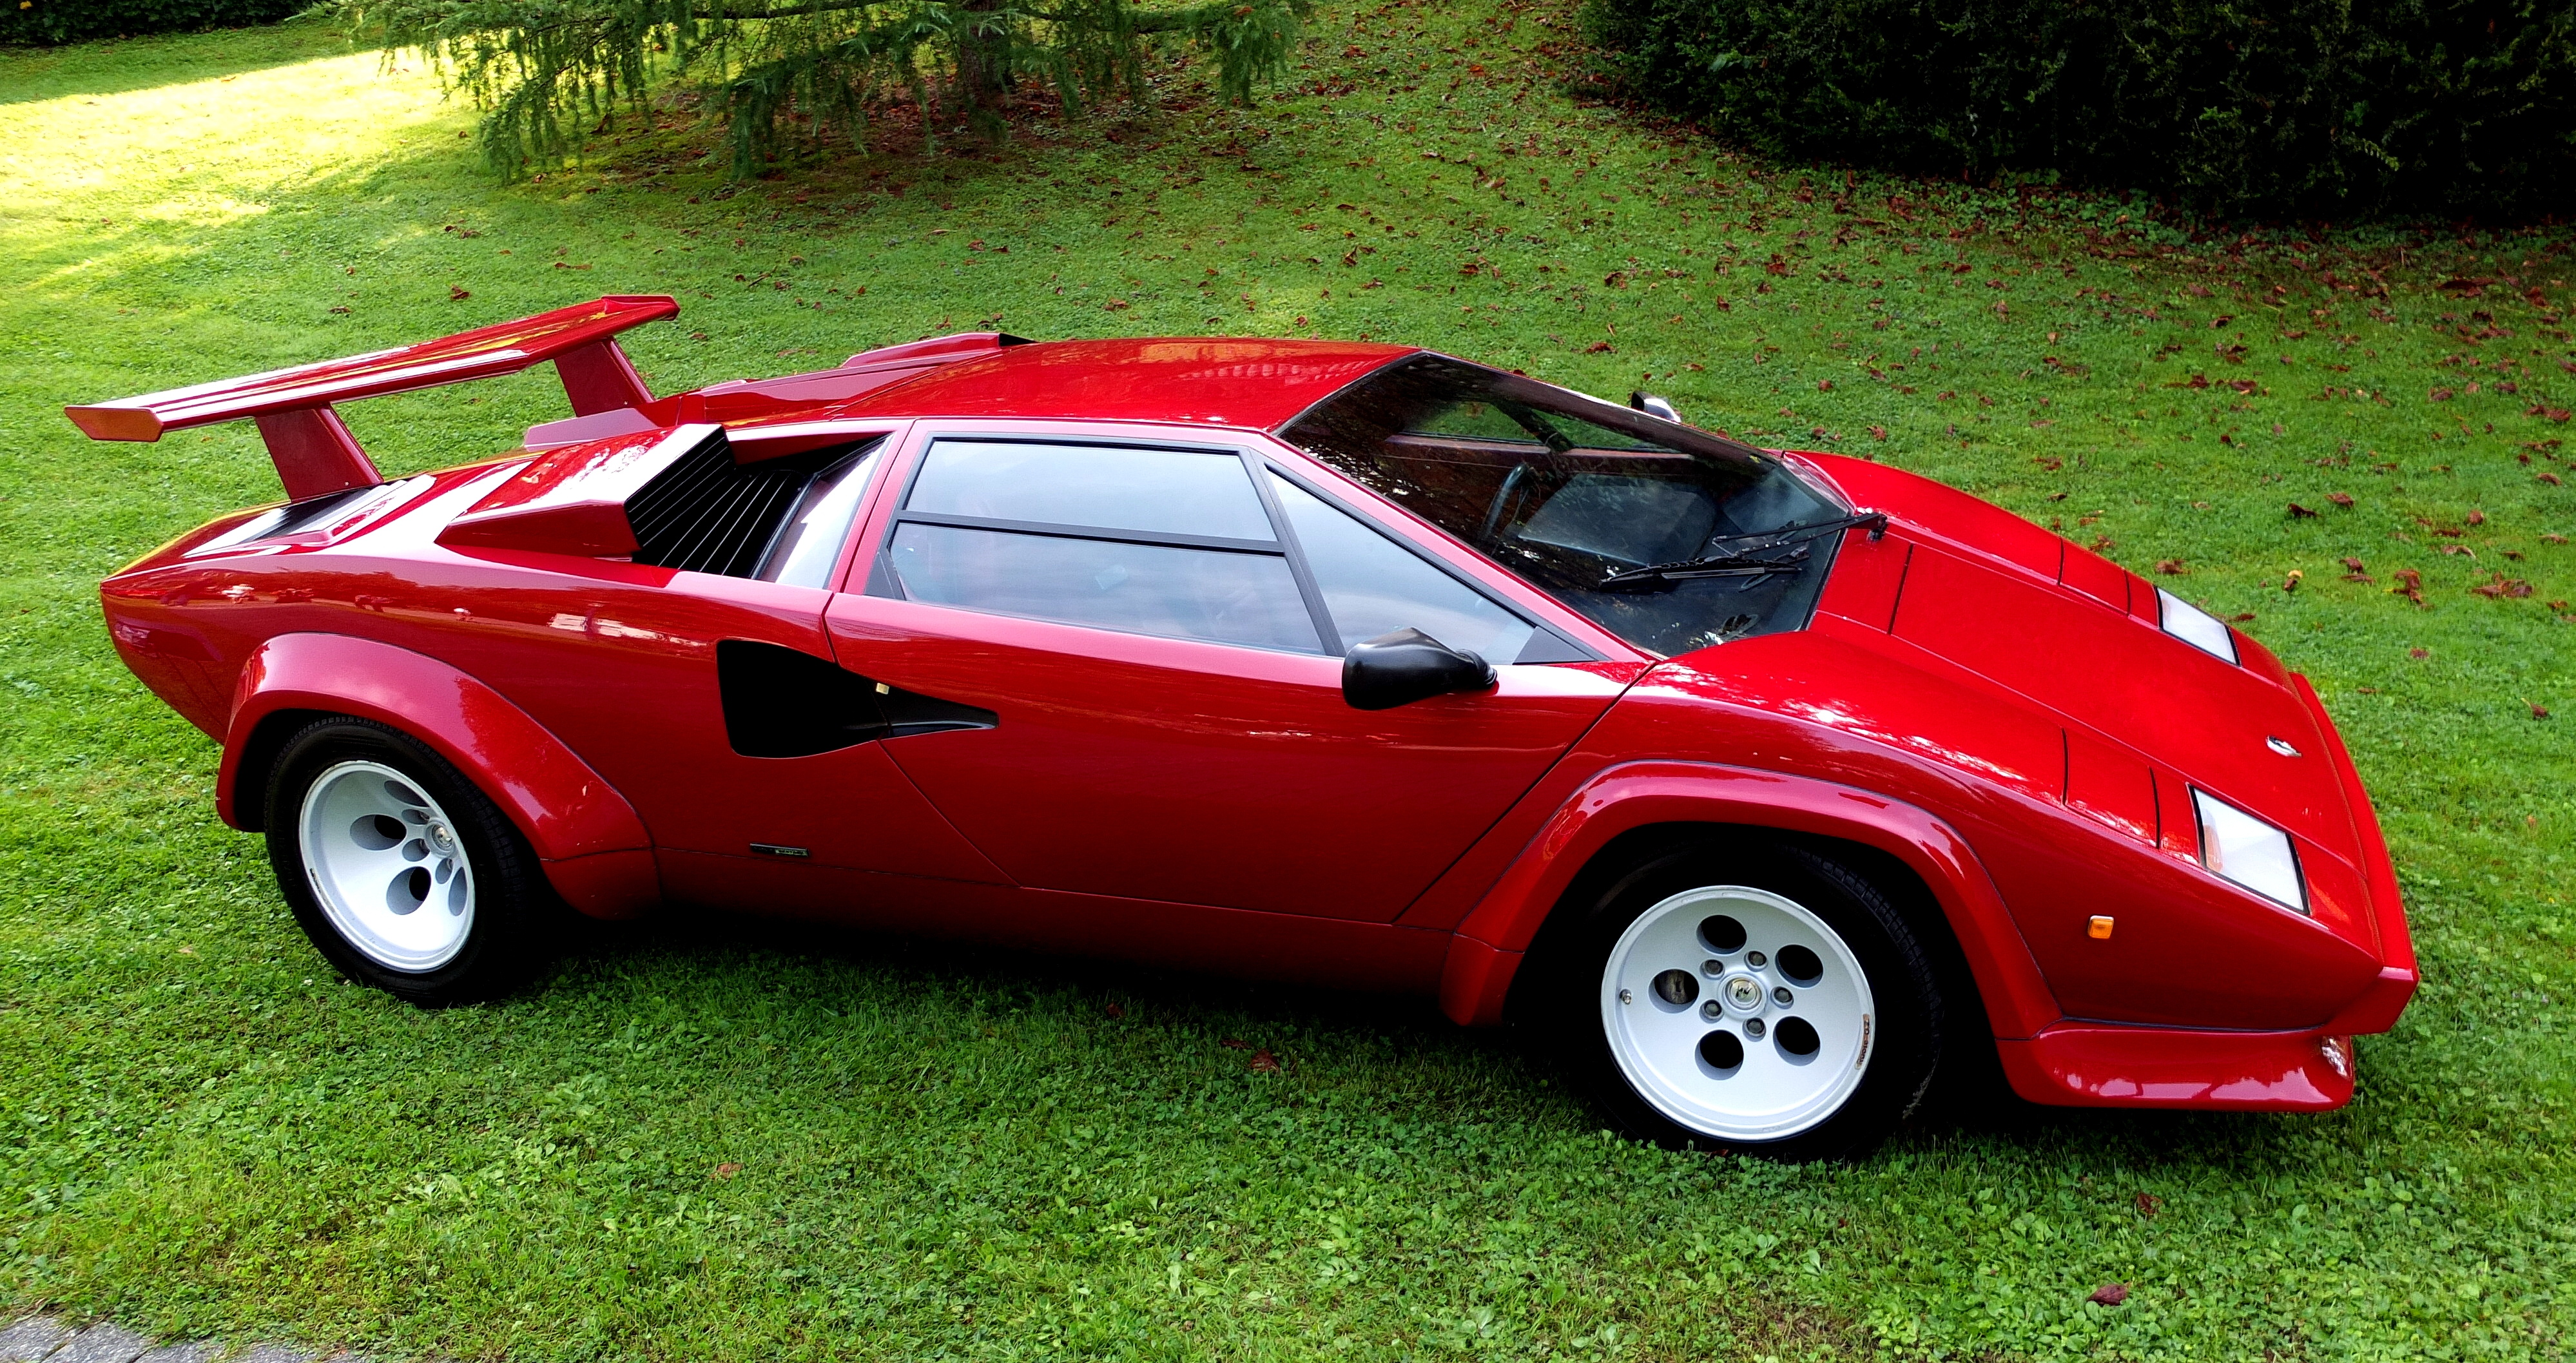 File:Lamborghini Countach LP 5000S 1983.jpg - Wikimedia Commons